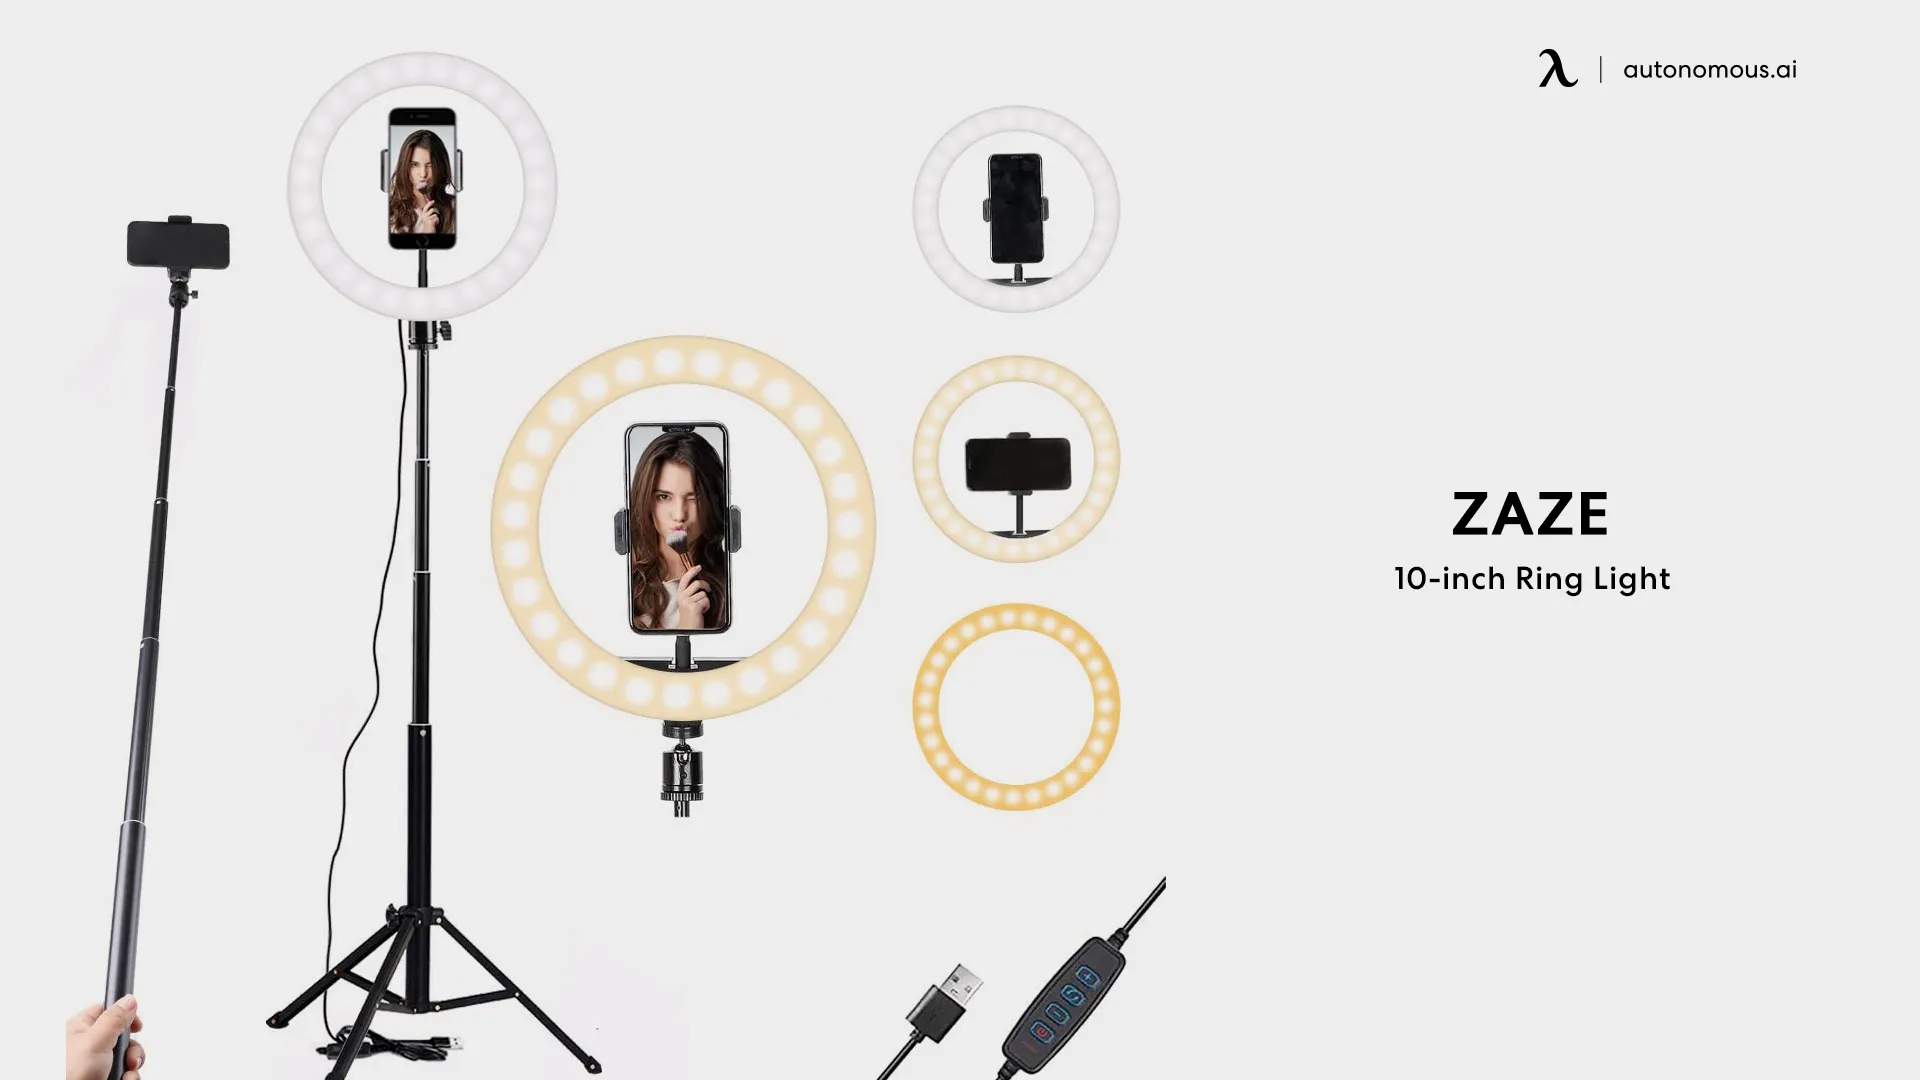 10-inch Ring Light by ZAZE - video conference lighting